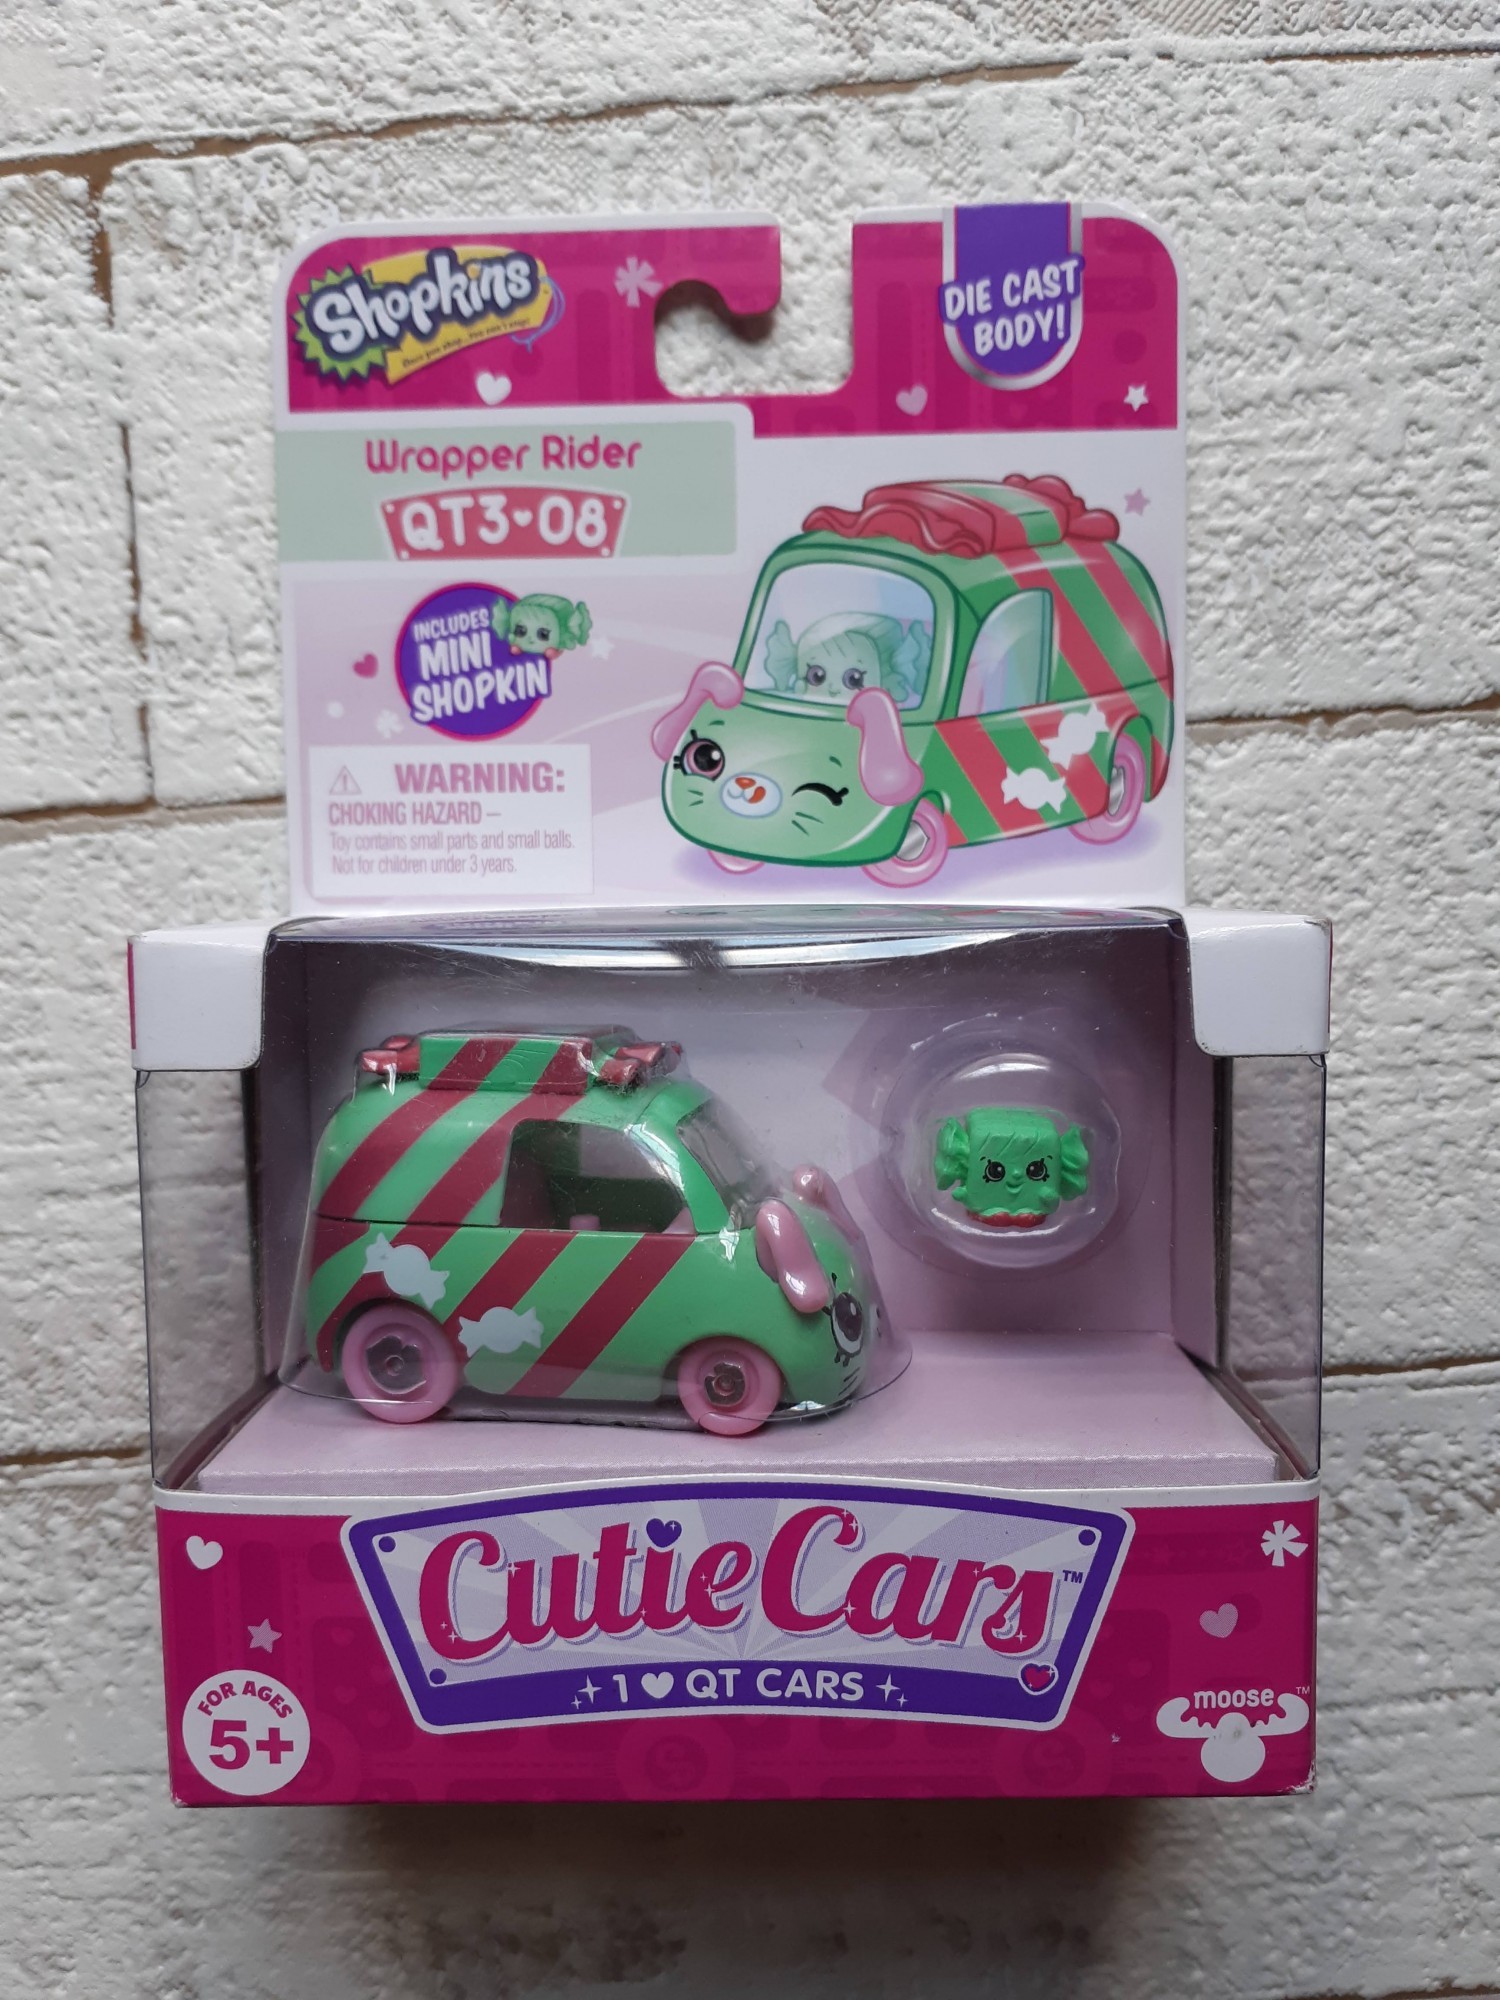 Shopkins Cutie Cars - Wrapper Rider Diecast QT3-08